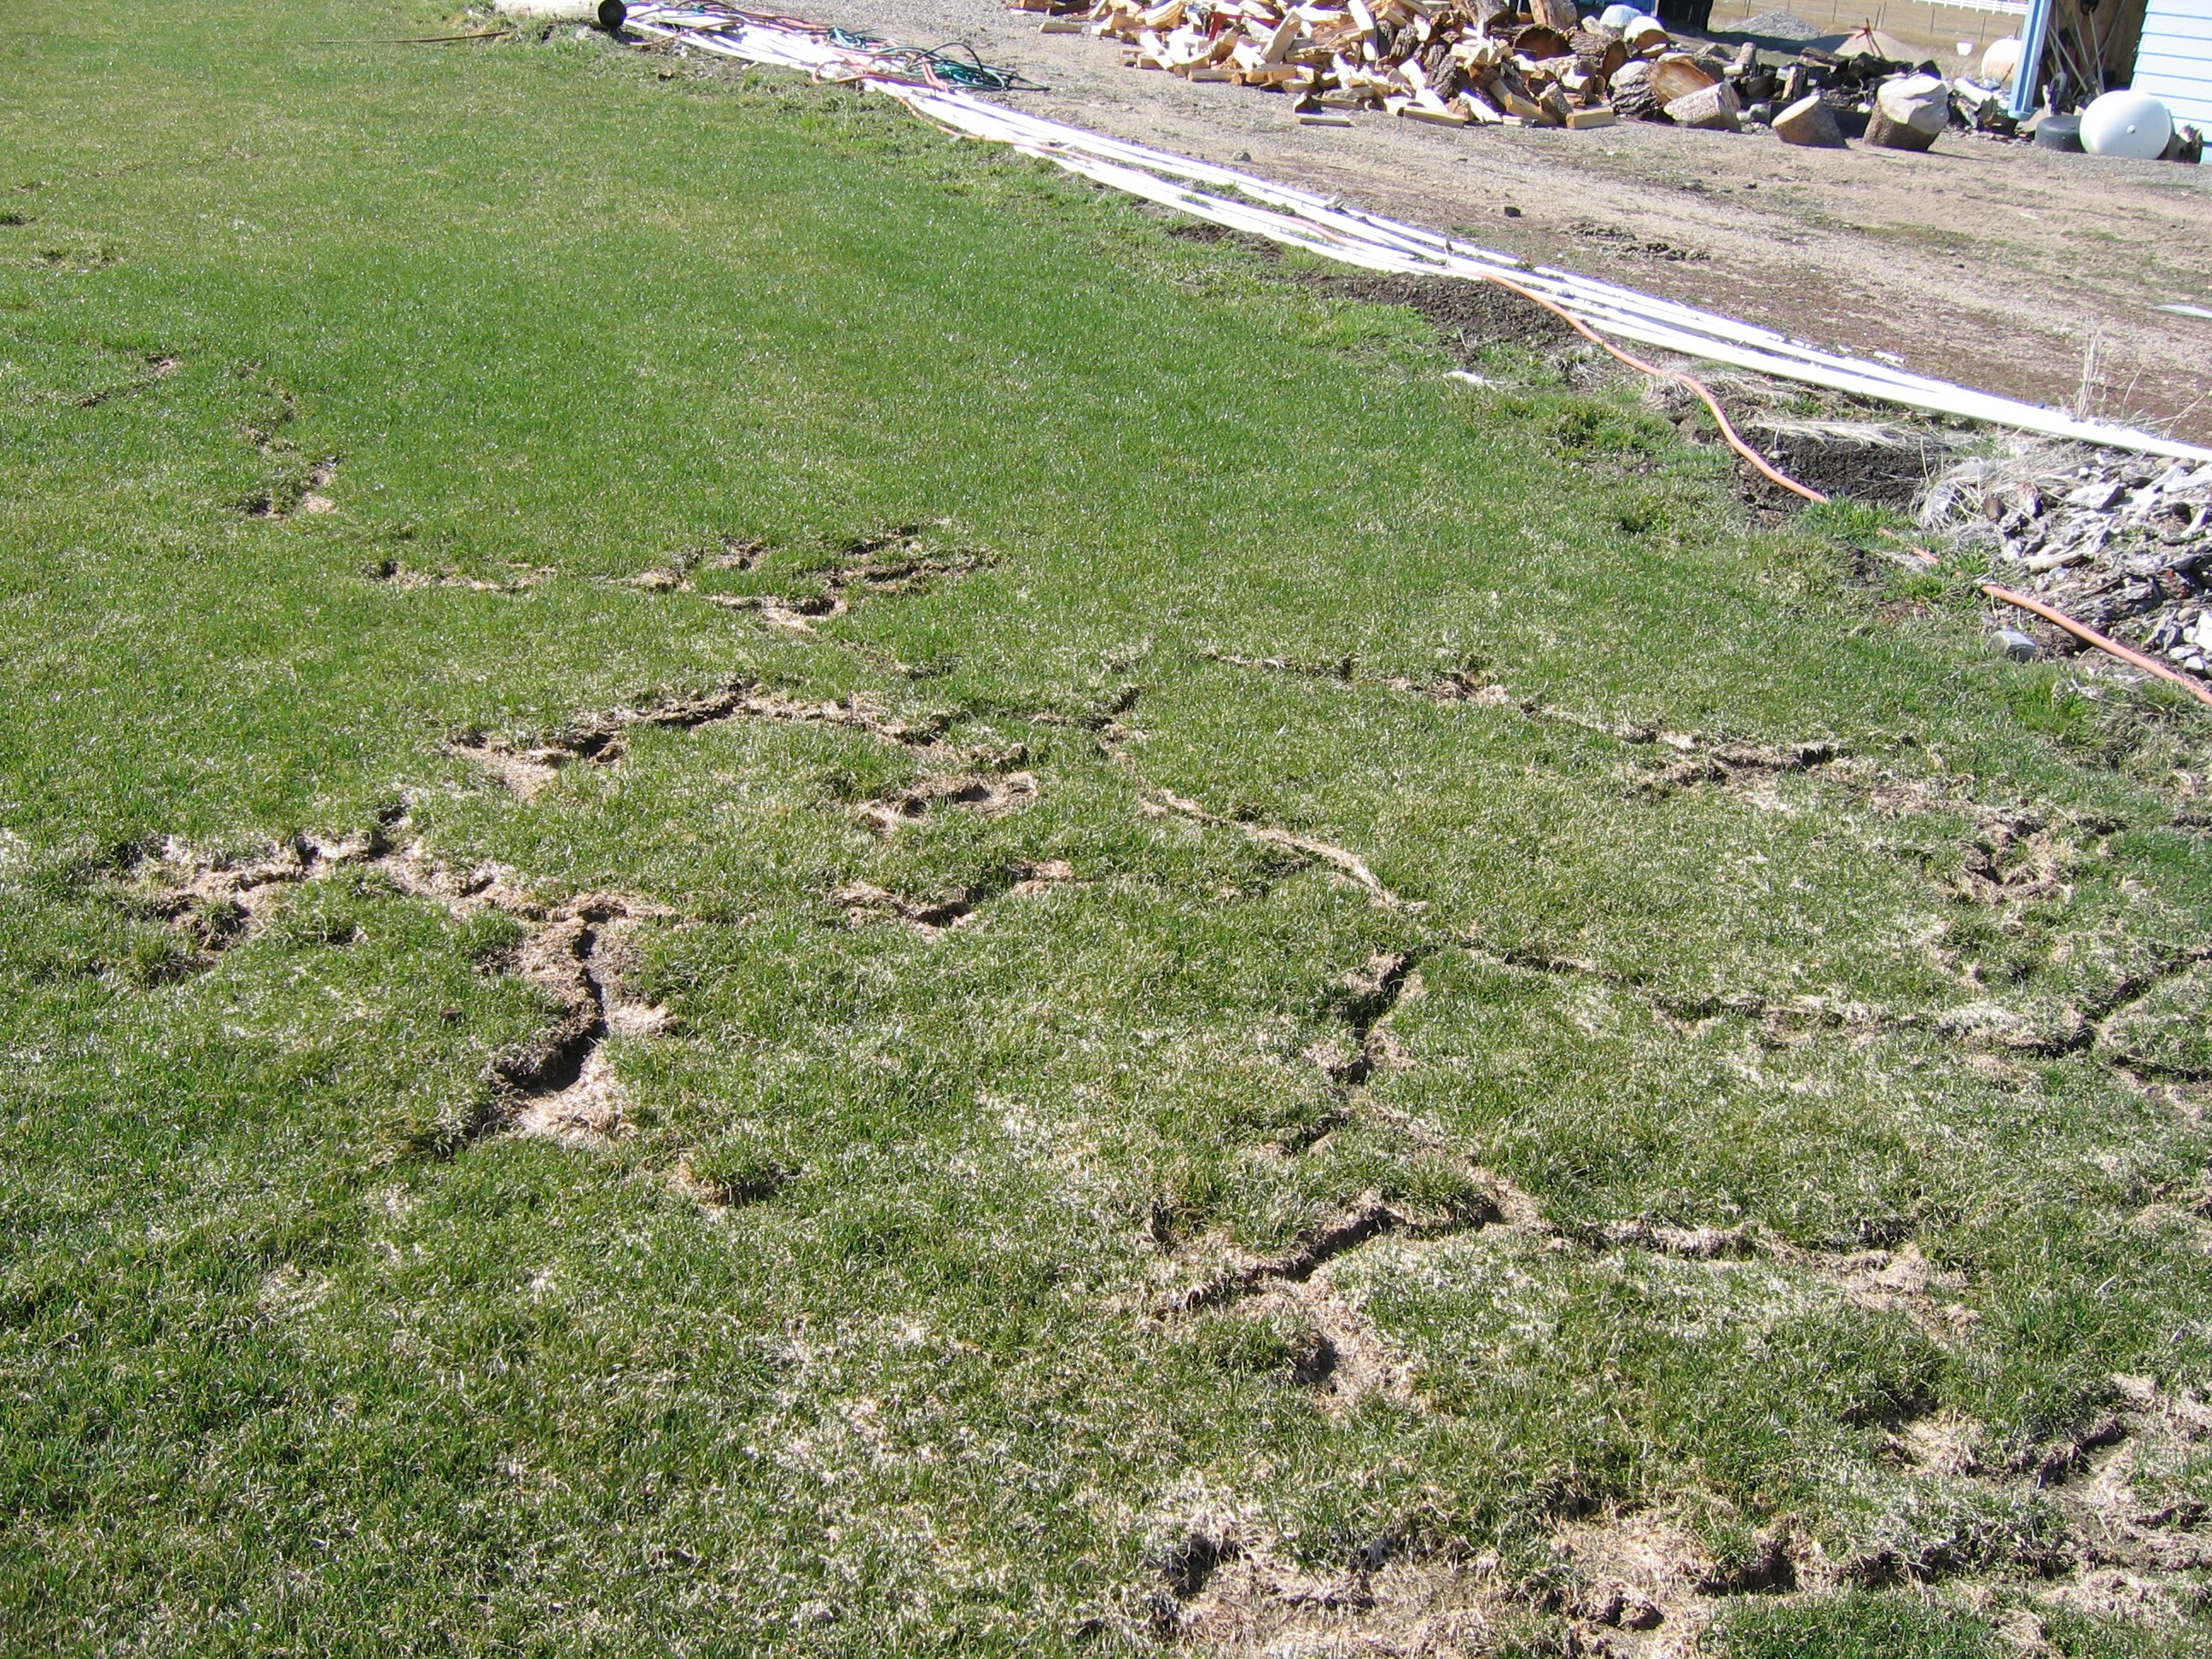 vole trails in grass after snow melt